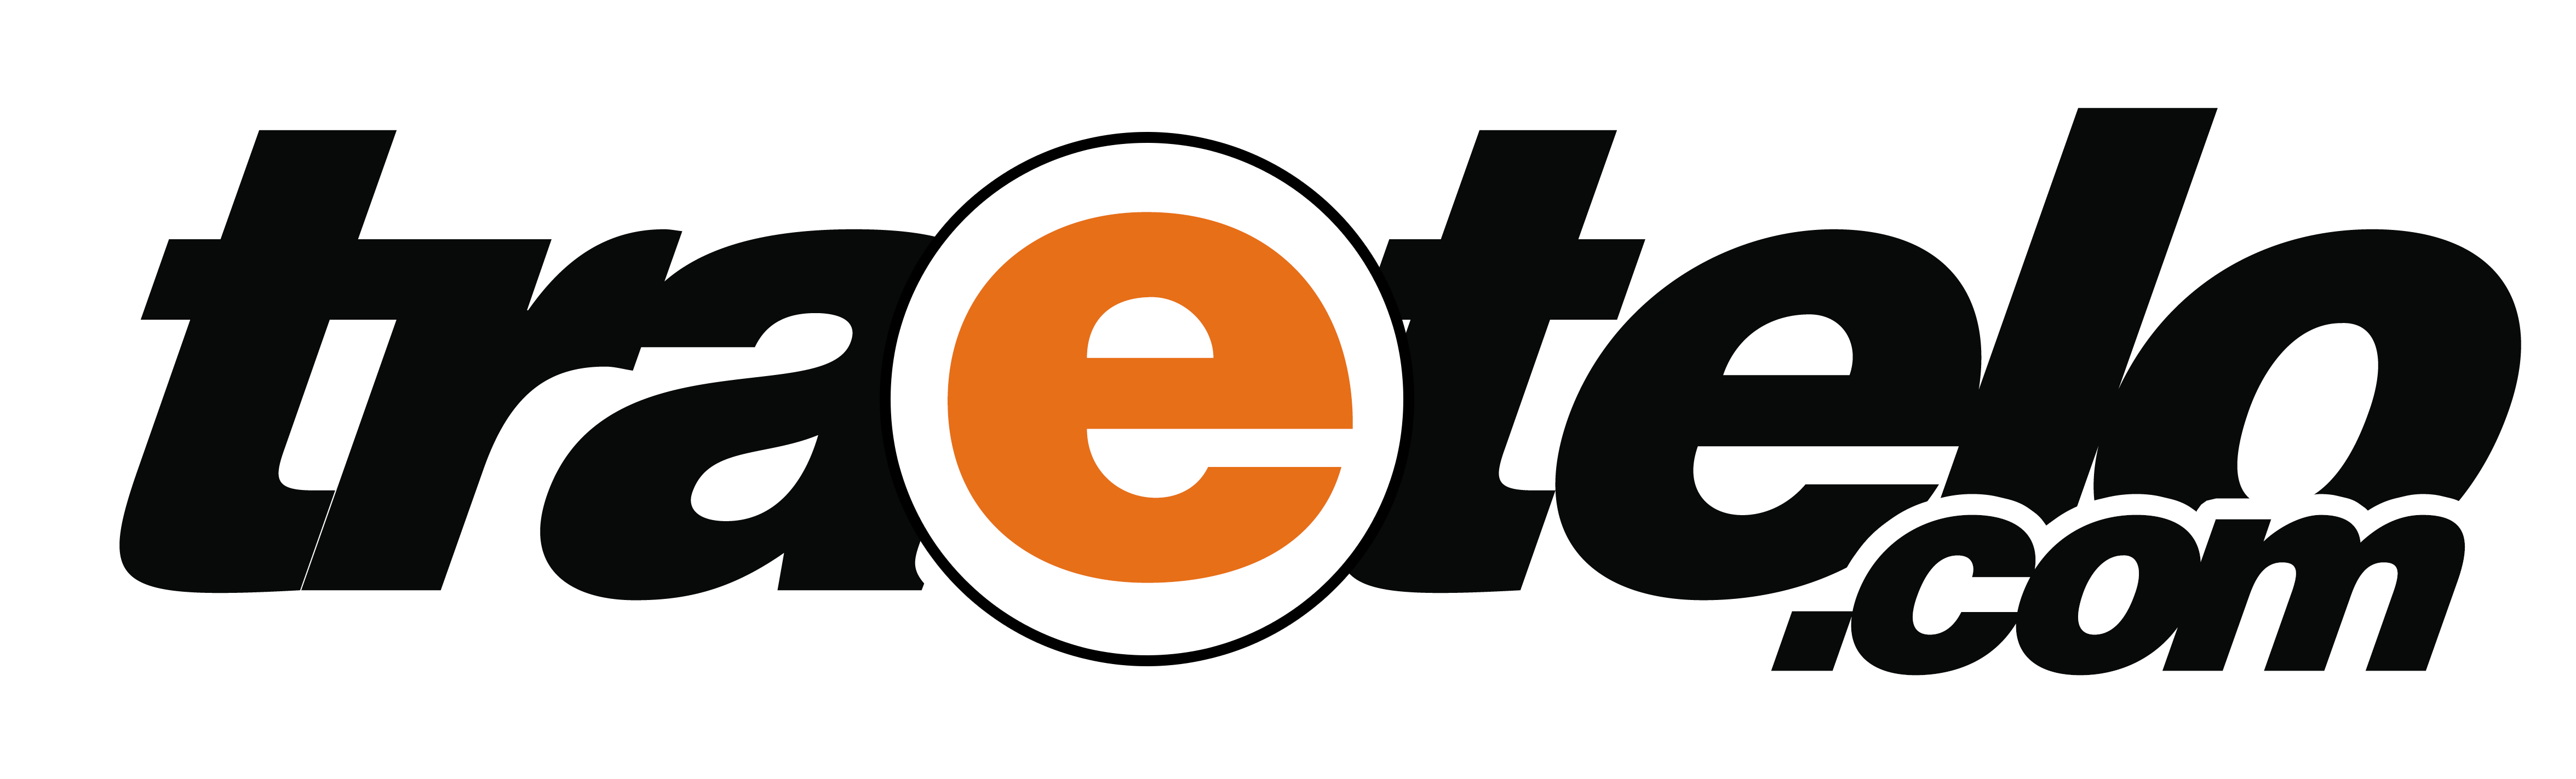 Traetelo logo - top online marketplaces for selling internationally